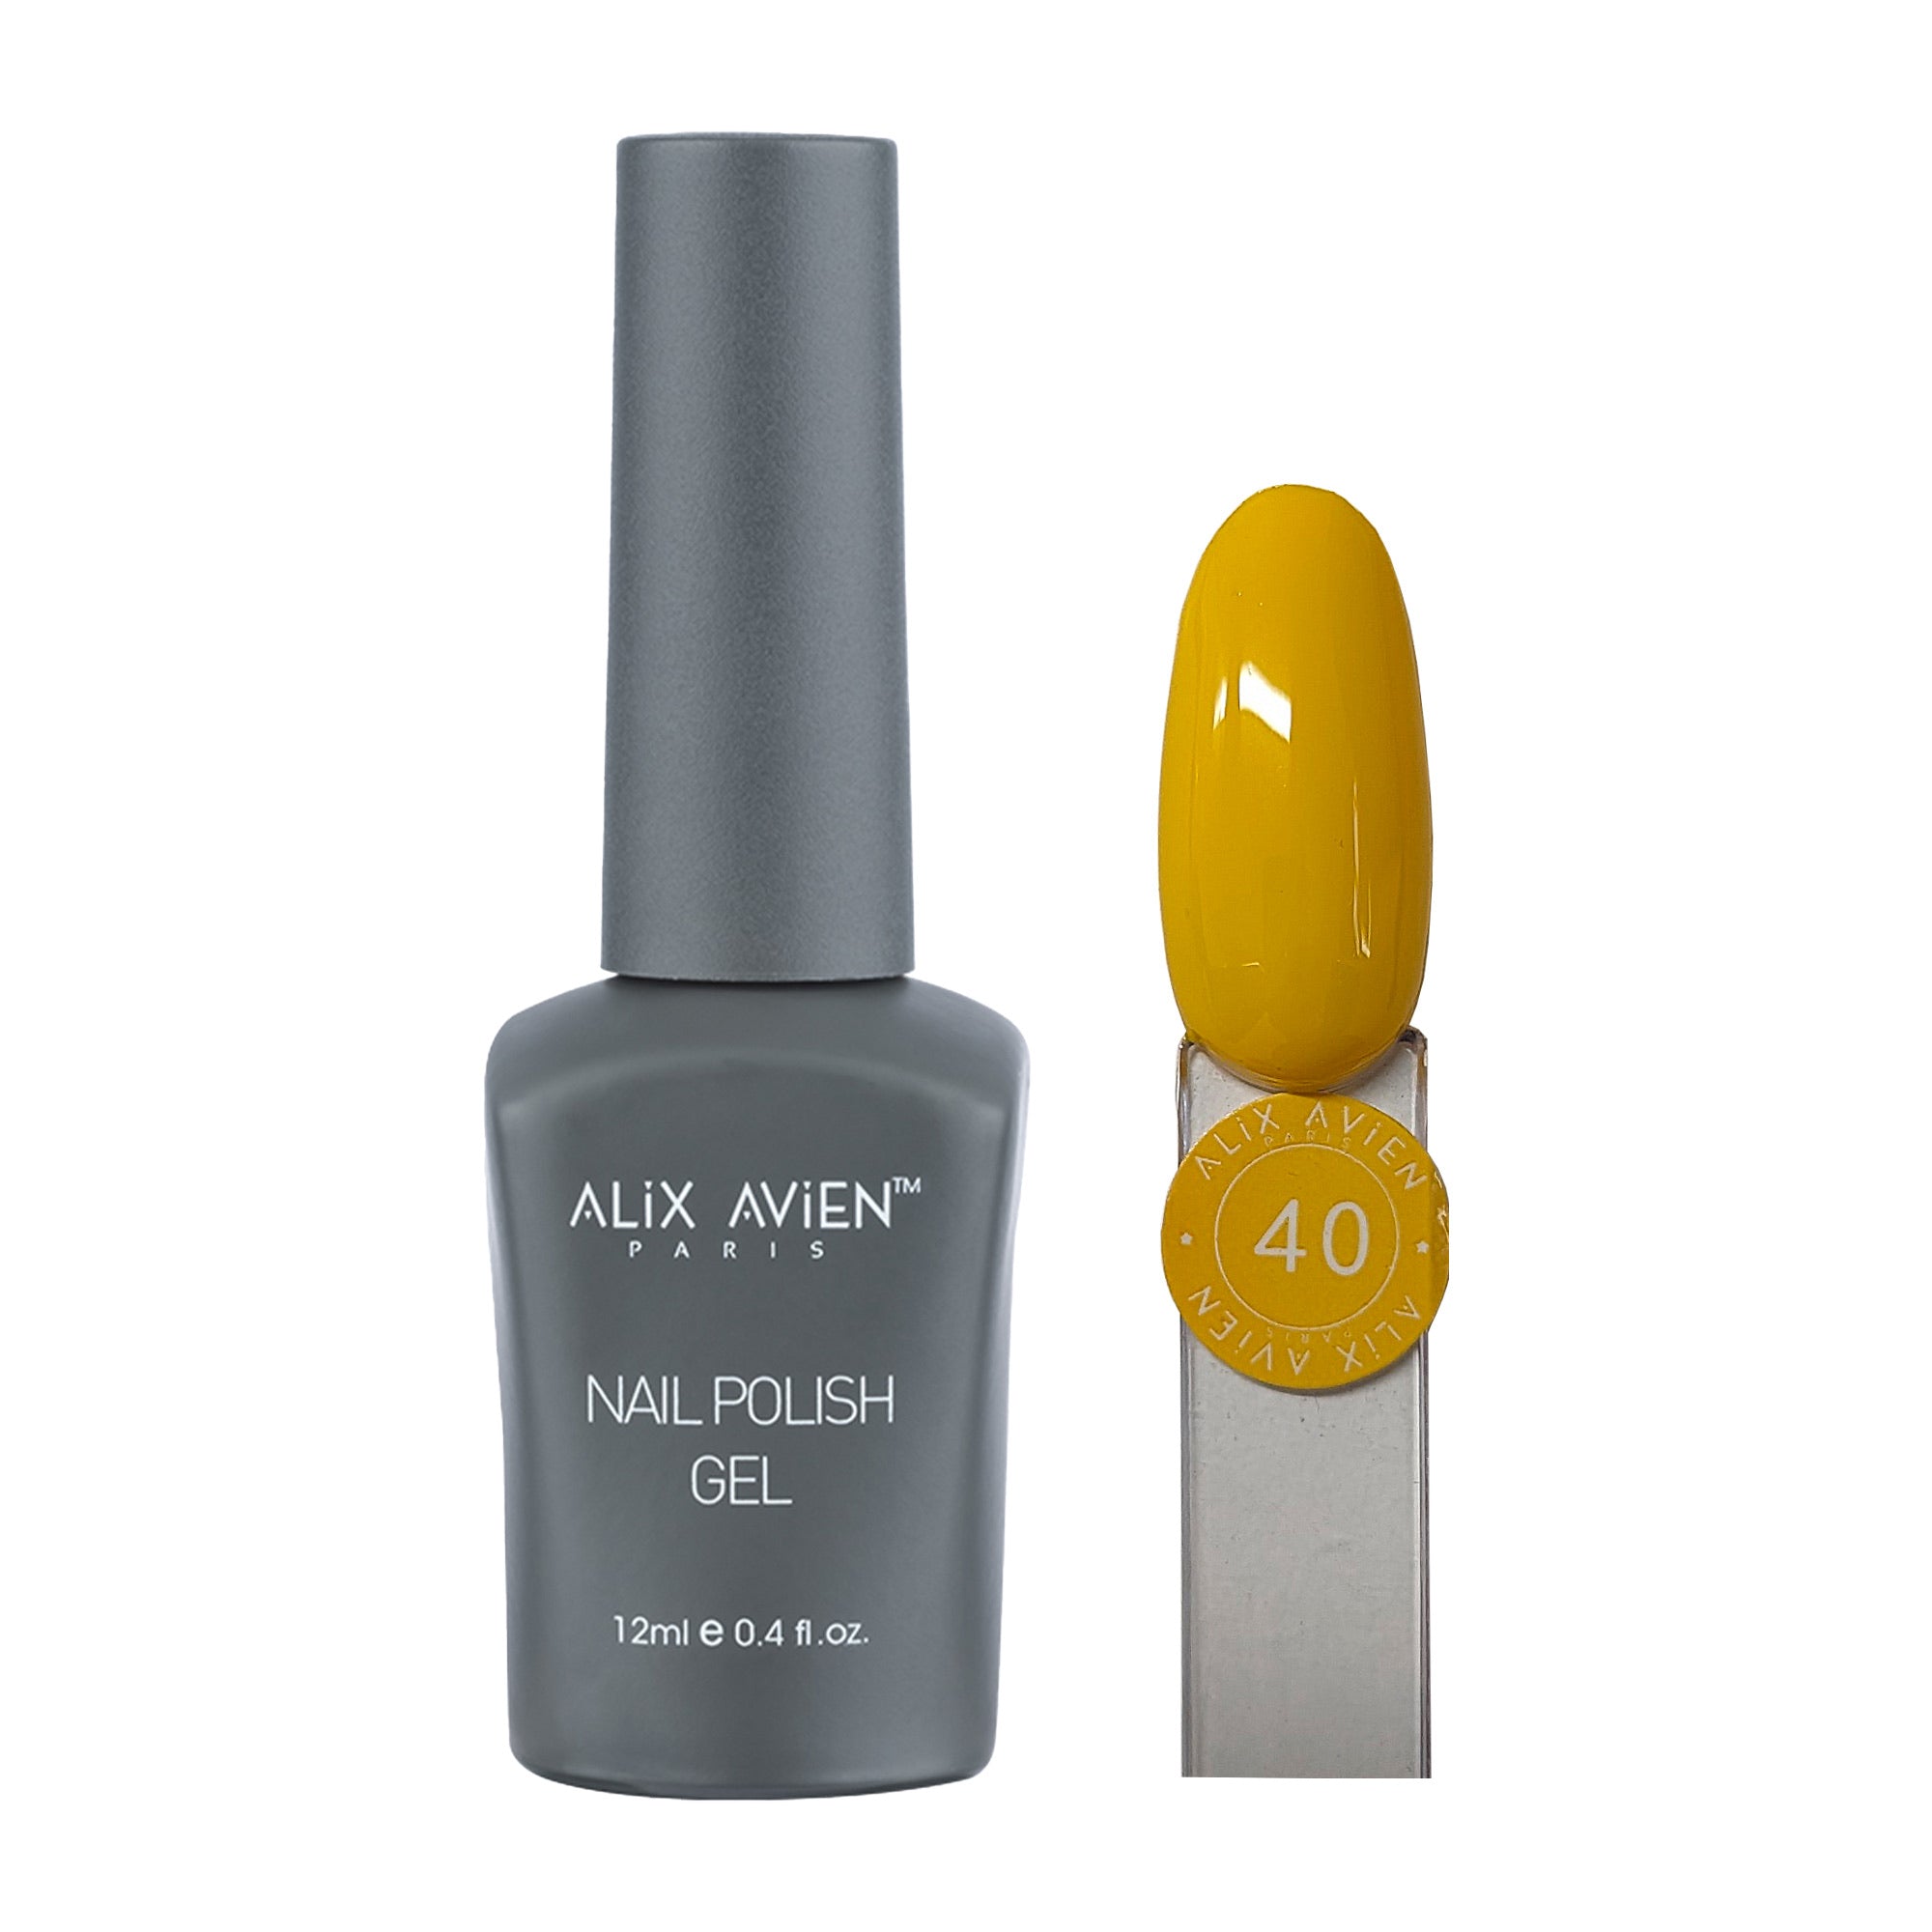 Alix Avien - Nail Polish Gel No.40 (Yellow) - Eson Direct